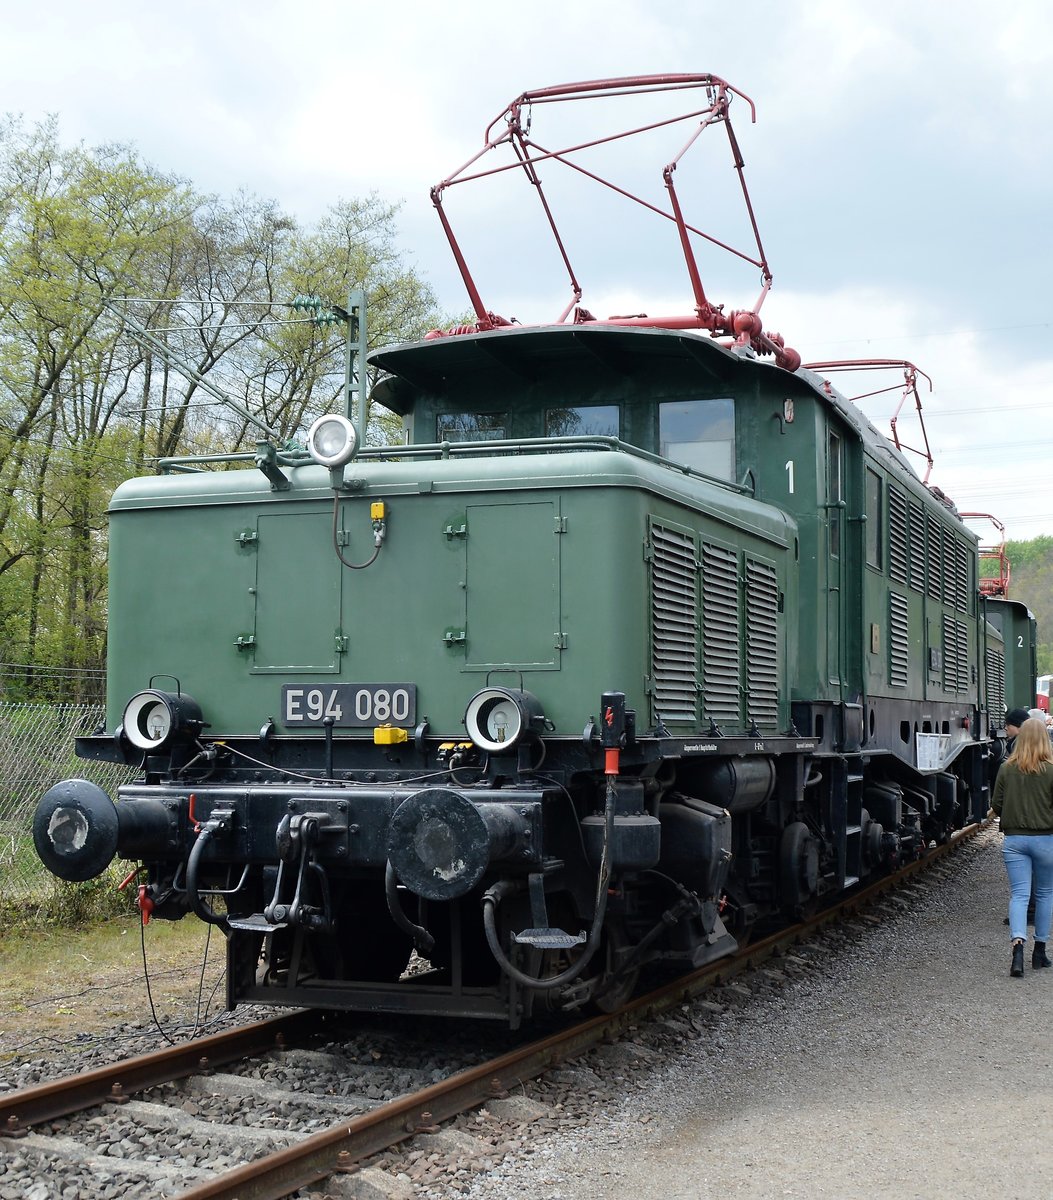 E94 080  bei den Jubiläumstagen im Eisenbahnmuseum Bochum Dahlhausen am 29.04.2017